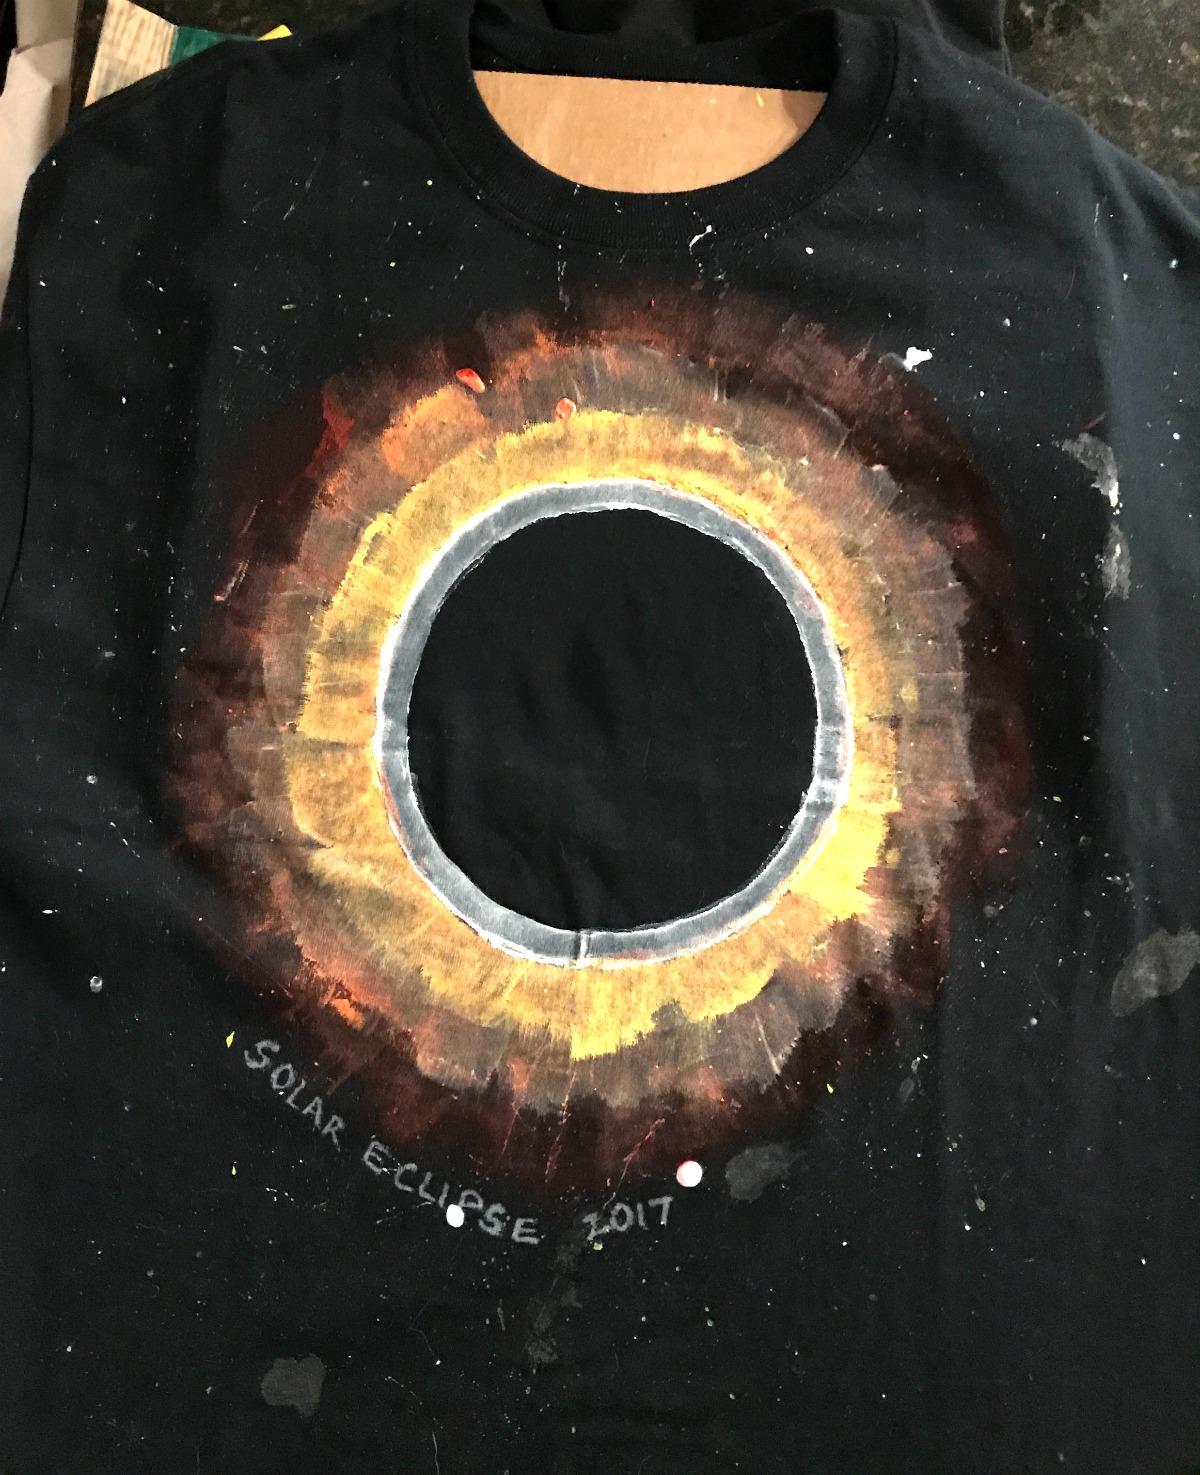 Great American Total Solar Eclipse Tshirt Craft For Kids (FUN ECLIPSE CRAFTS) - Solar Eclipse Tee Craft showing the Finished Solar Eclipse T shirt